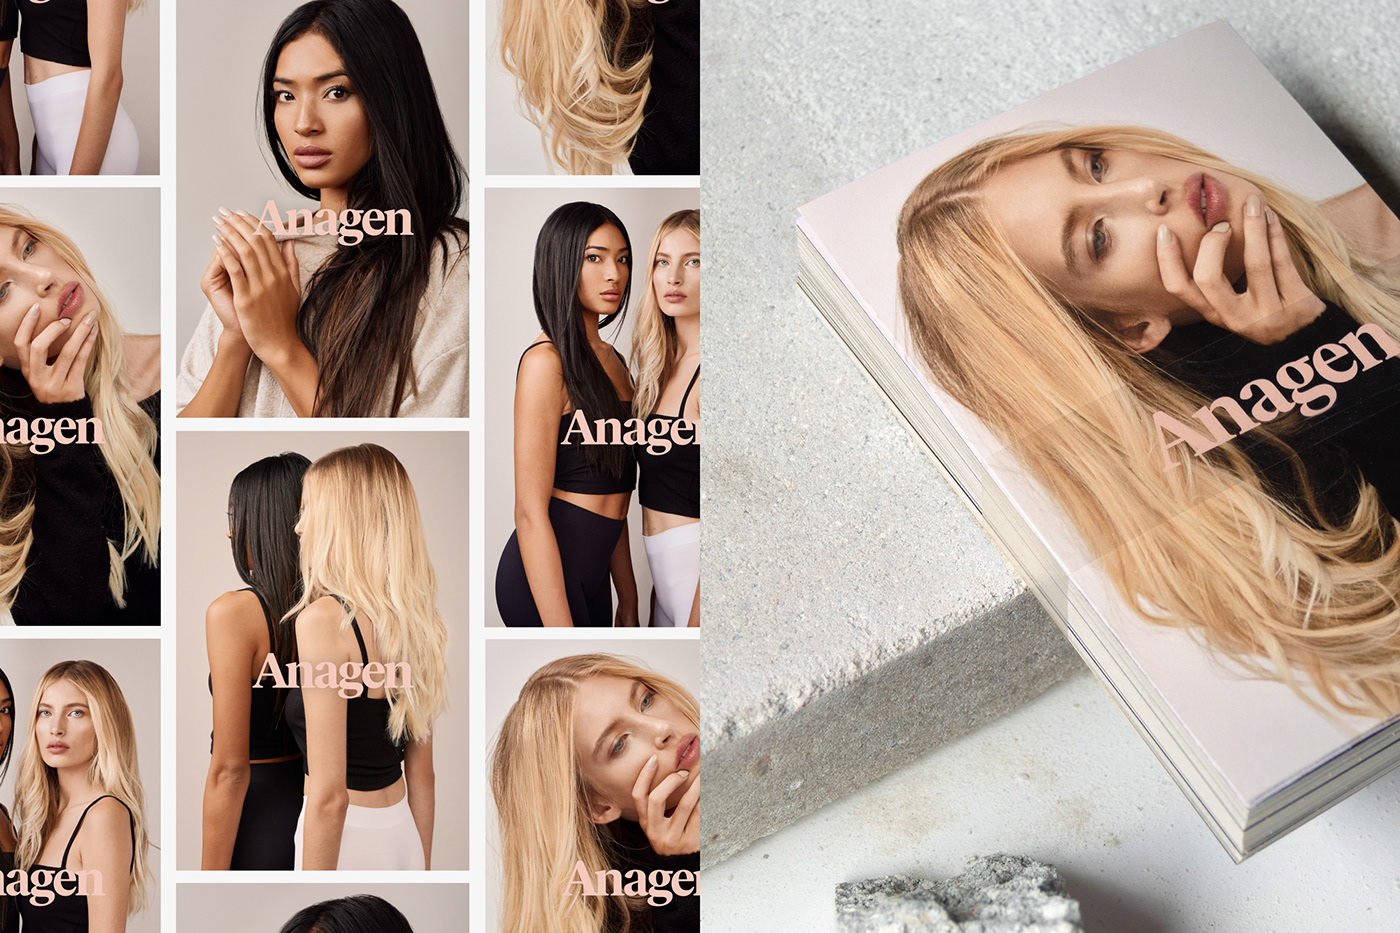 anagen salon beauty modern minimal identity feminine product extensions yungbld